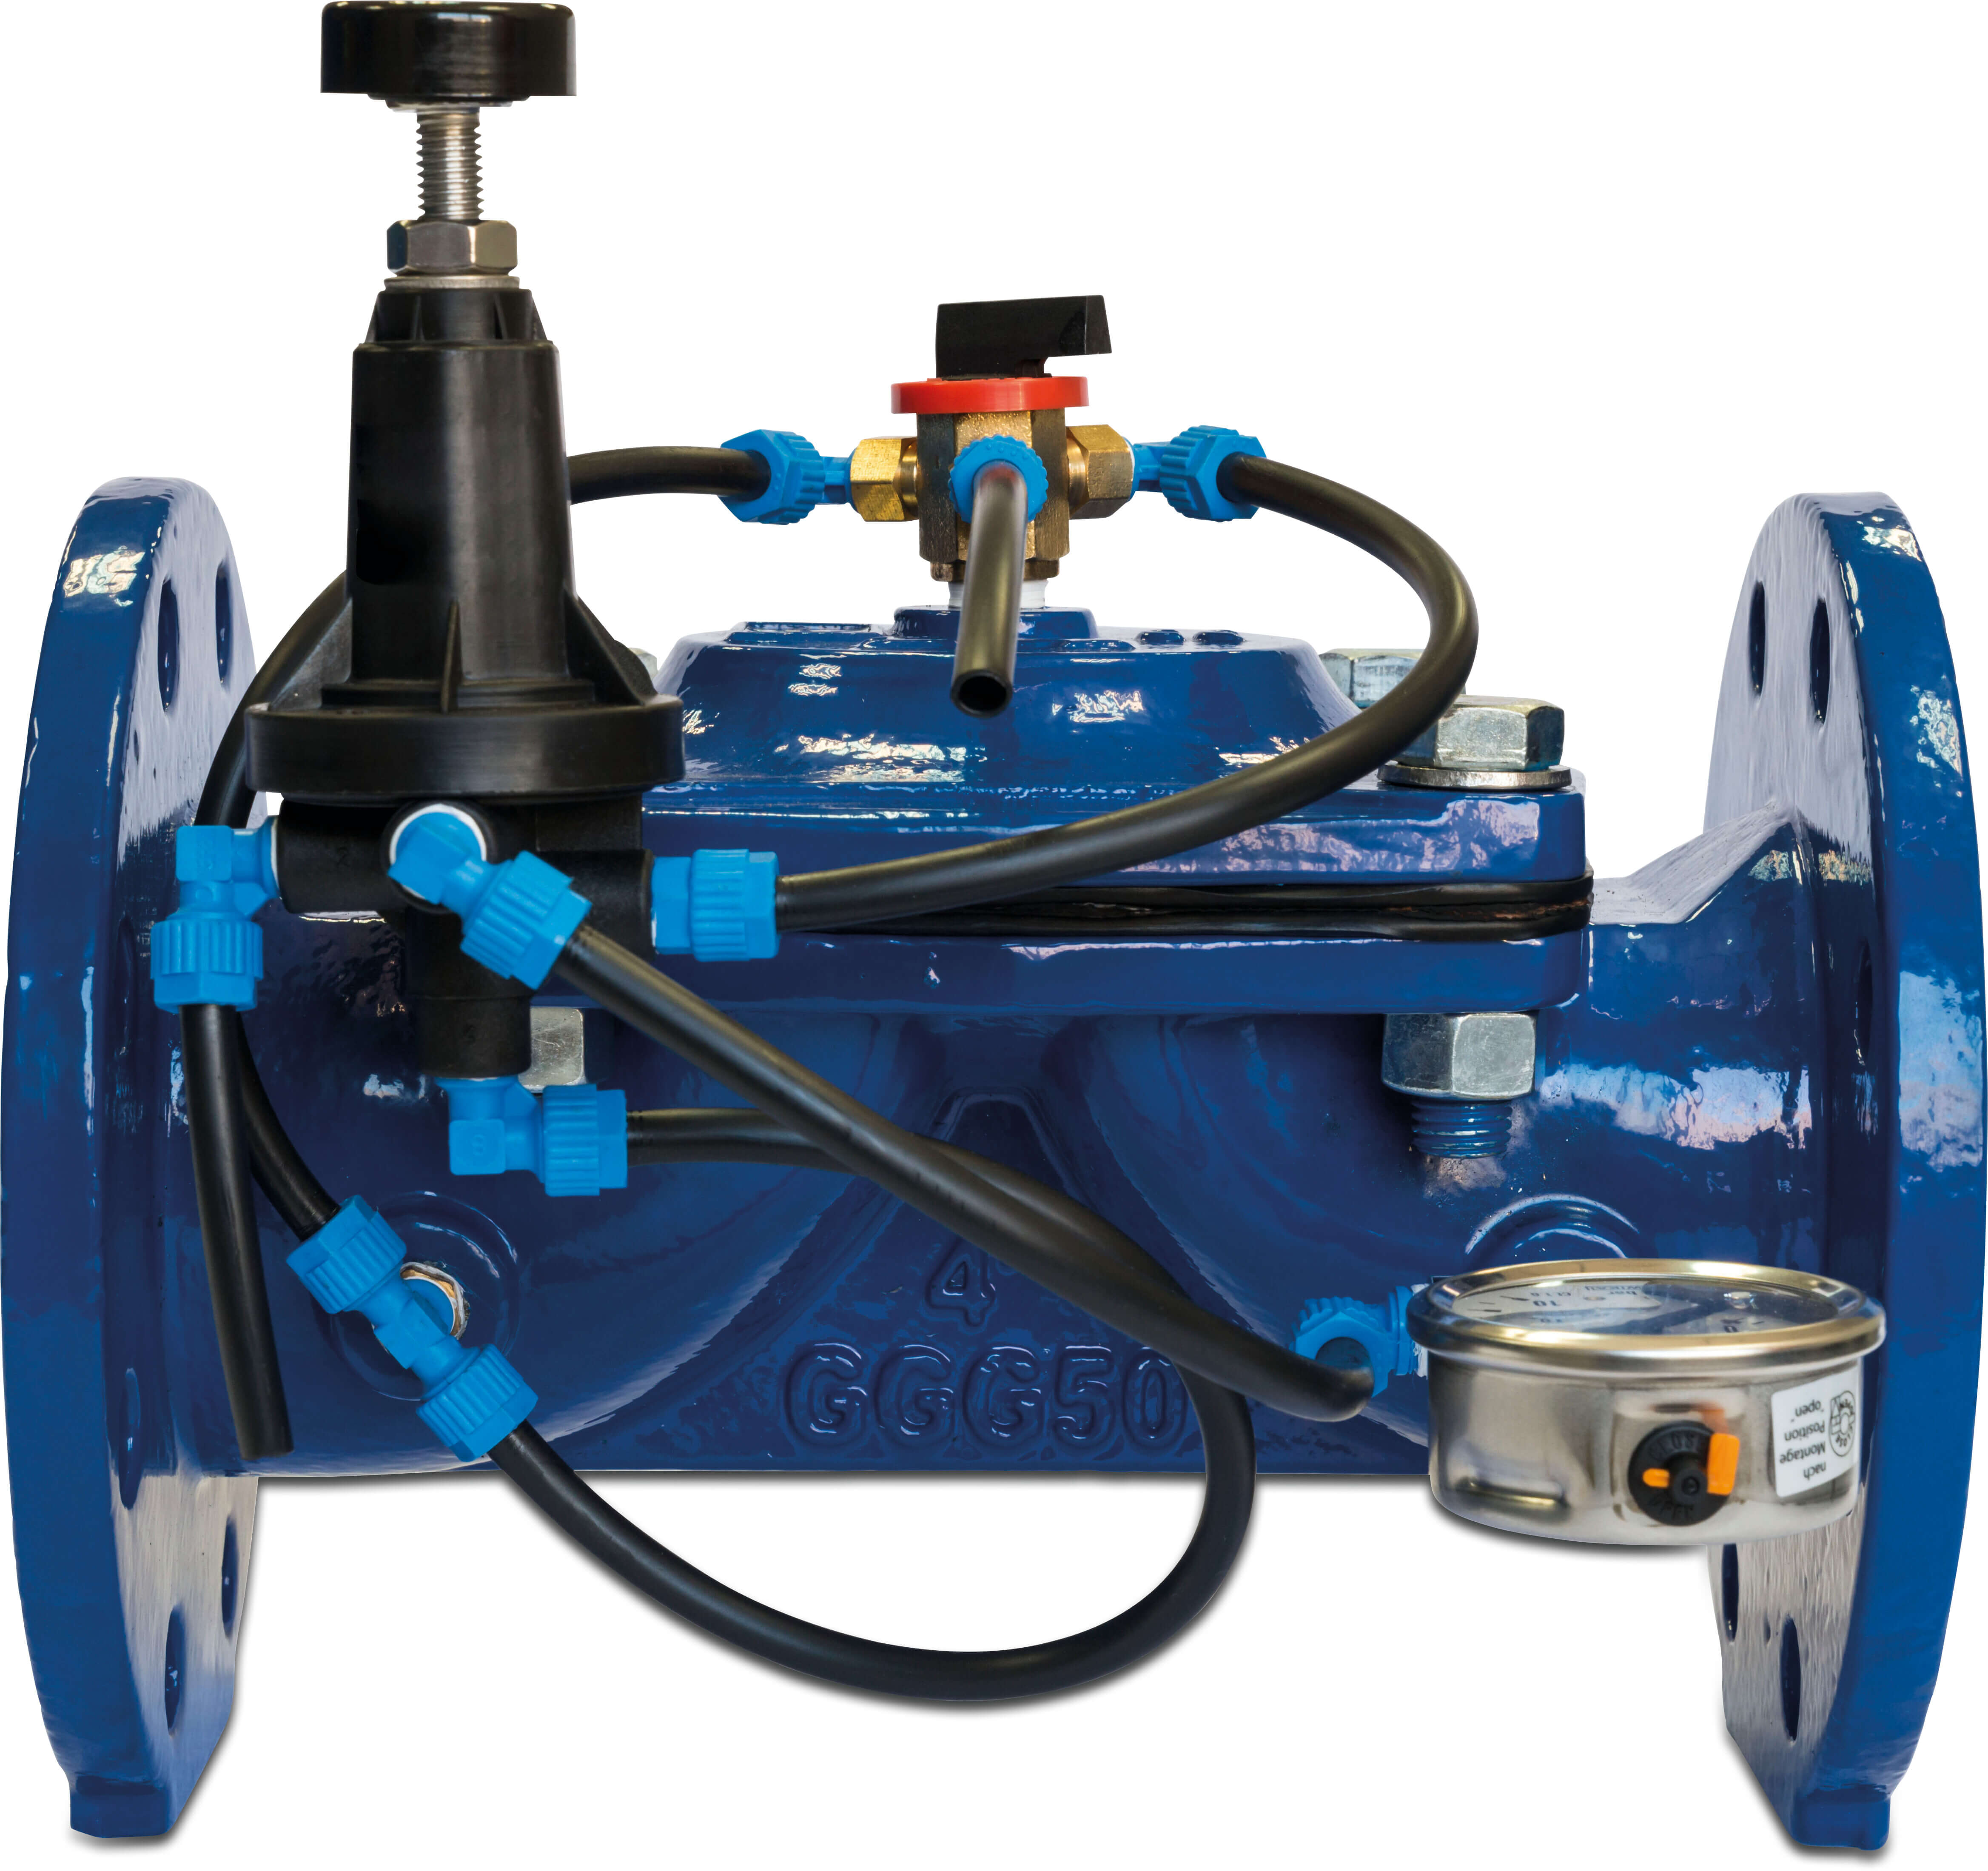 Azud Pressure reducing hydraulic valve cast iron GG 25 epoxy coating 3" flange 16bar blue